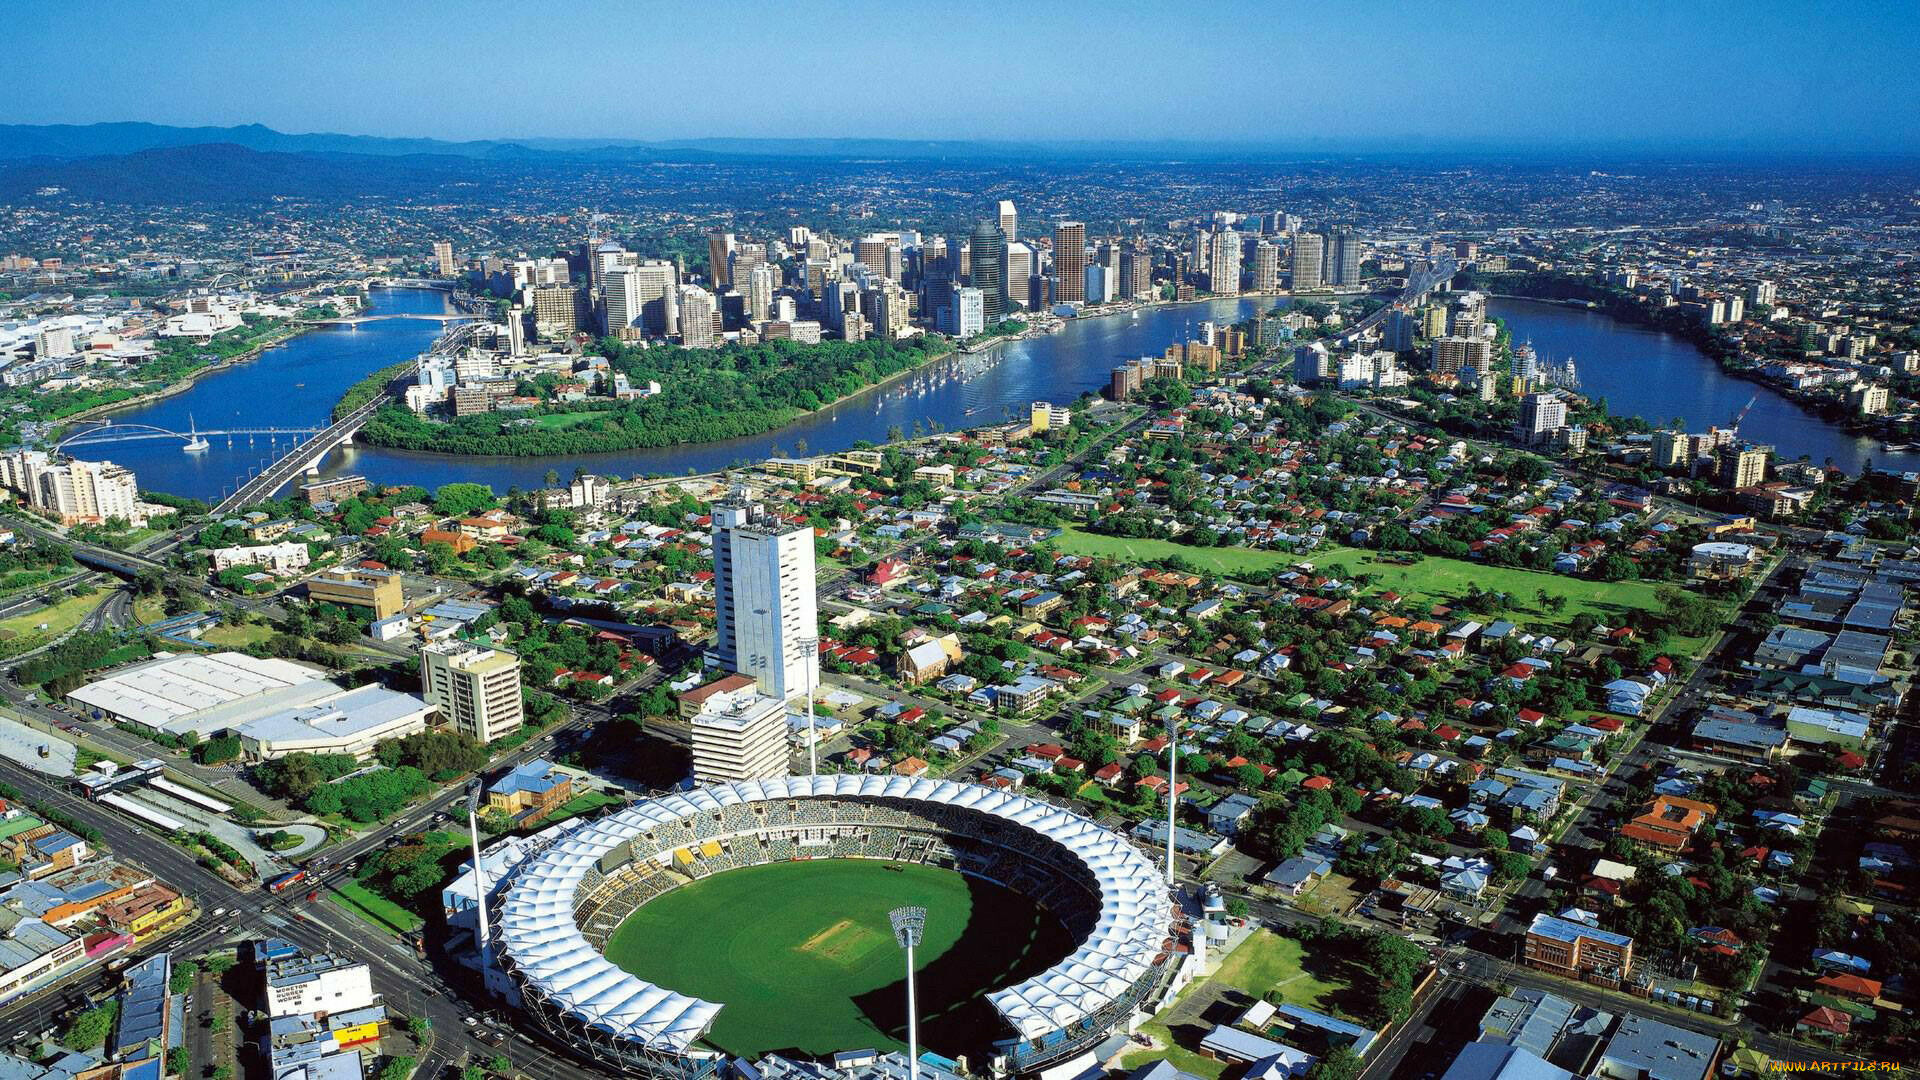 The 2032 Olympics will be held in Brisbane, Australia